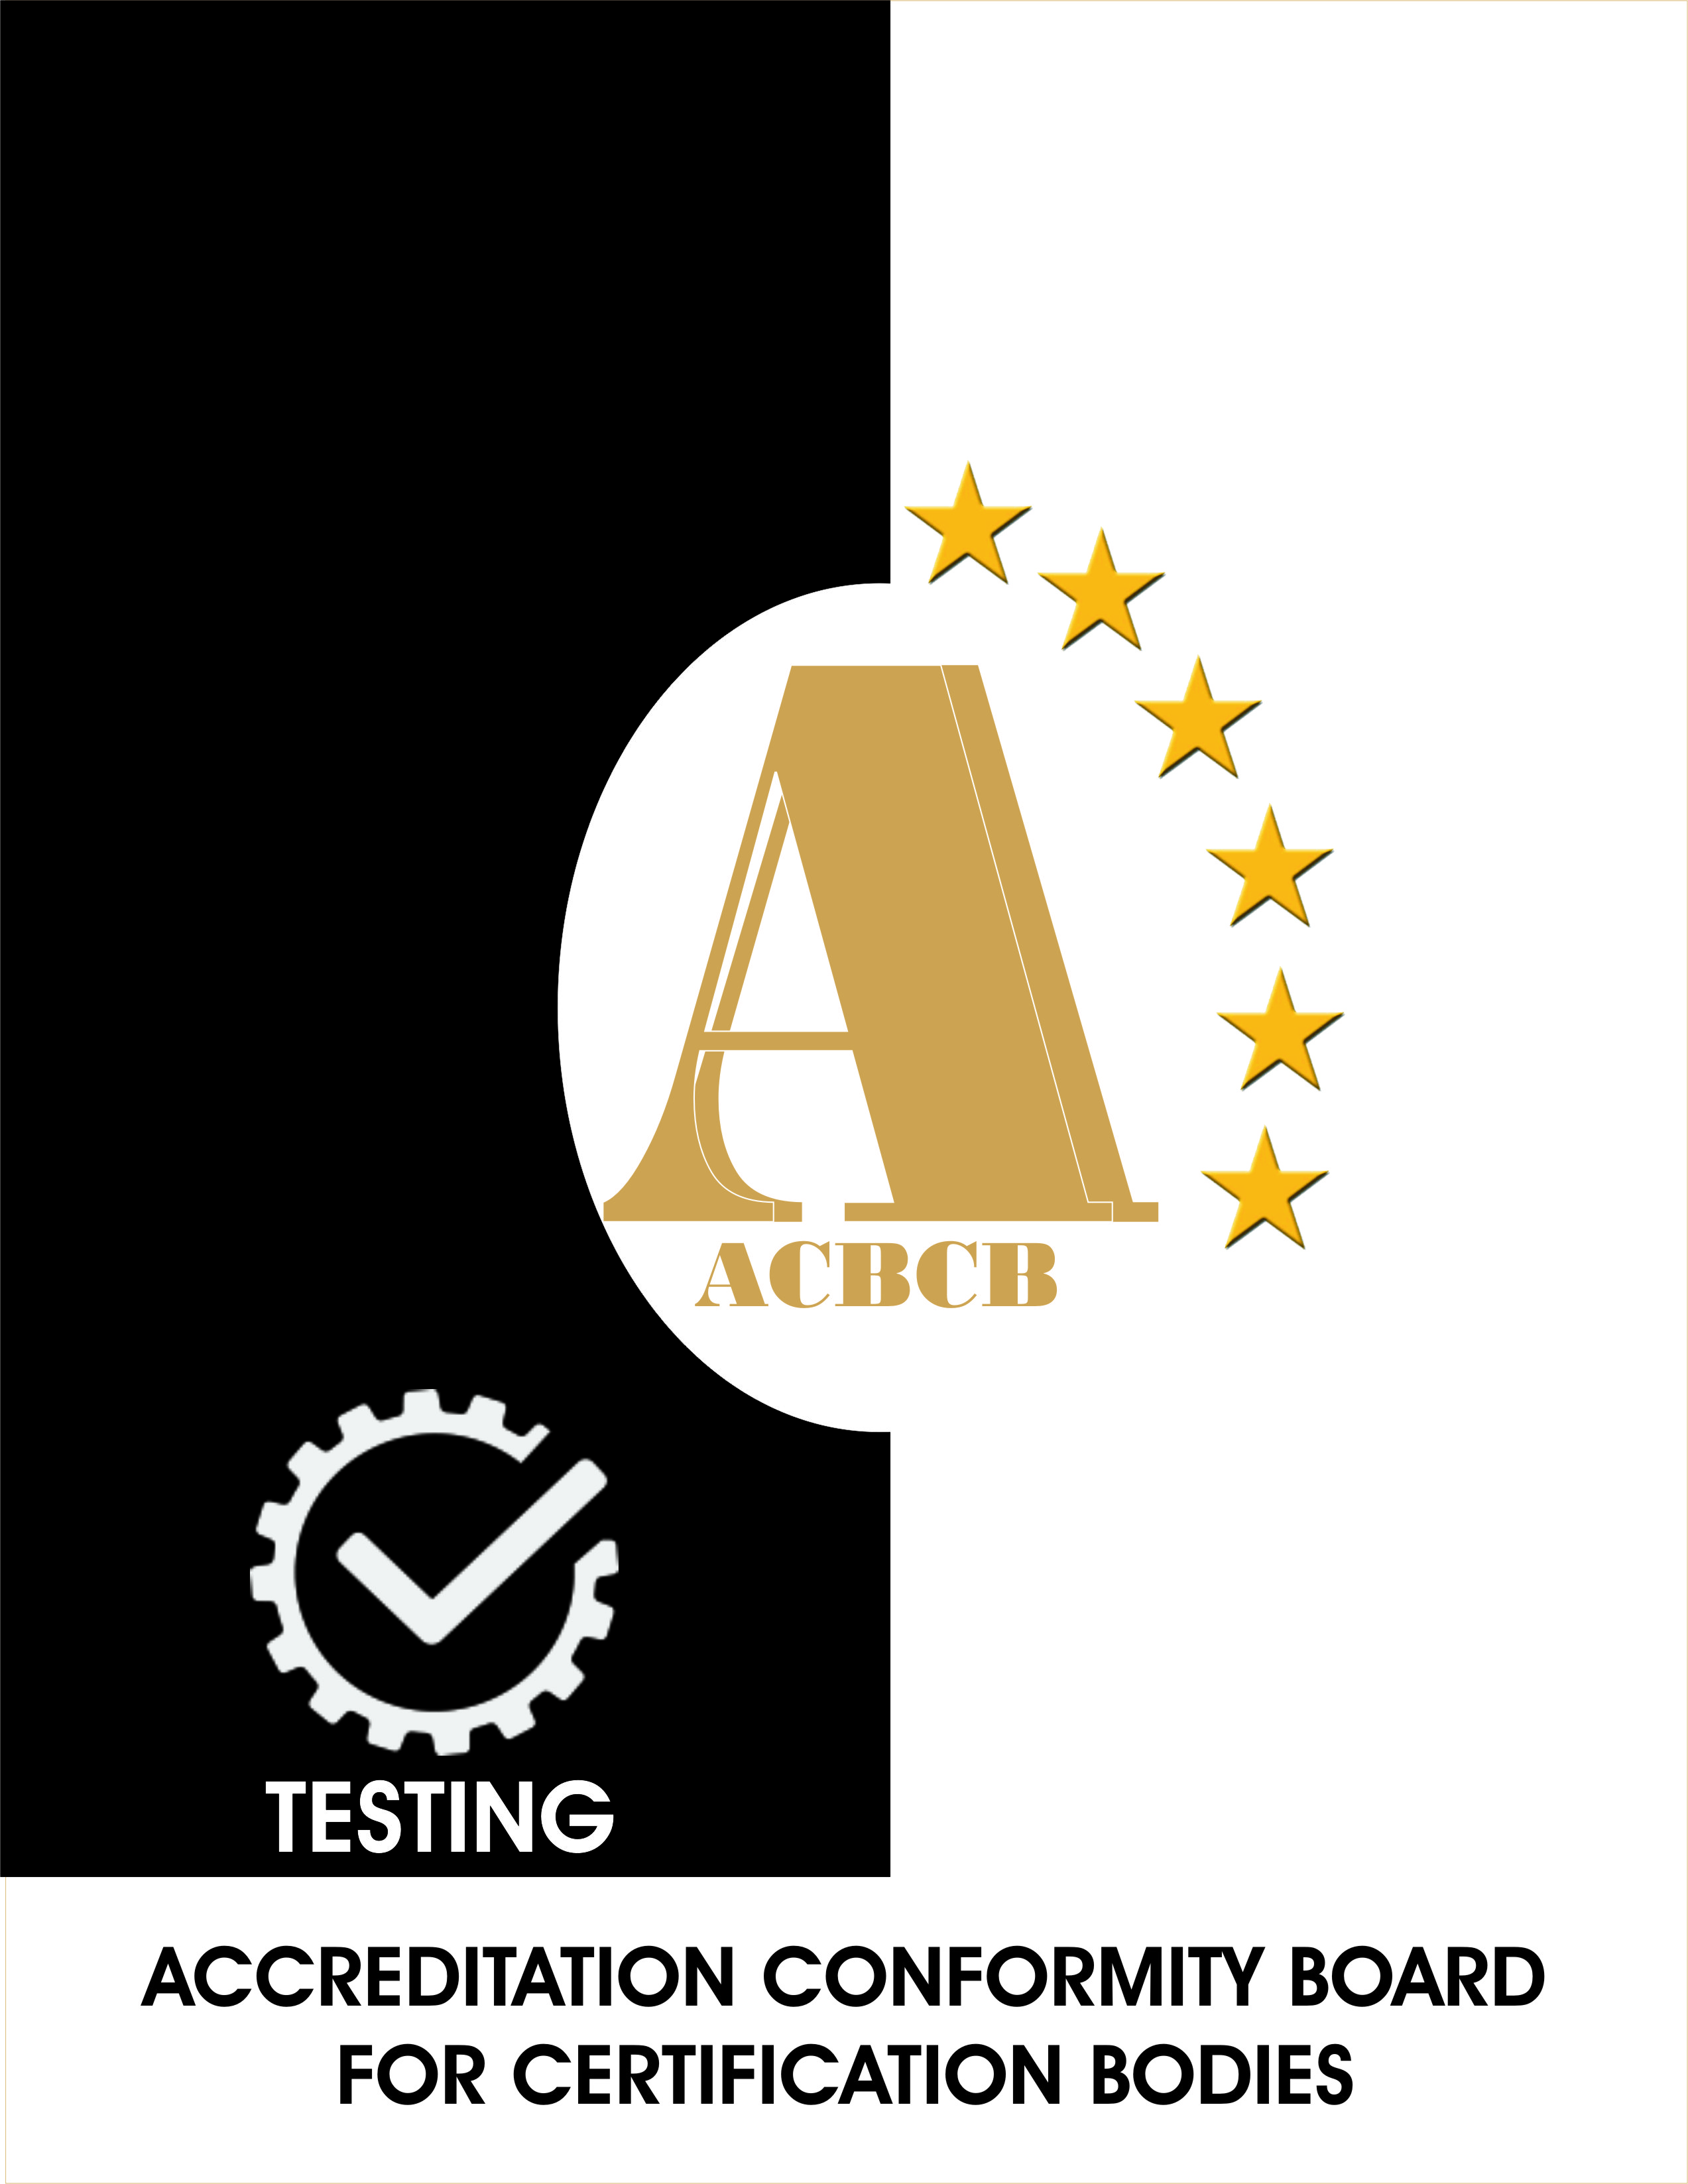 ACBCB TESTING SYMBOL